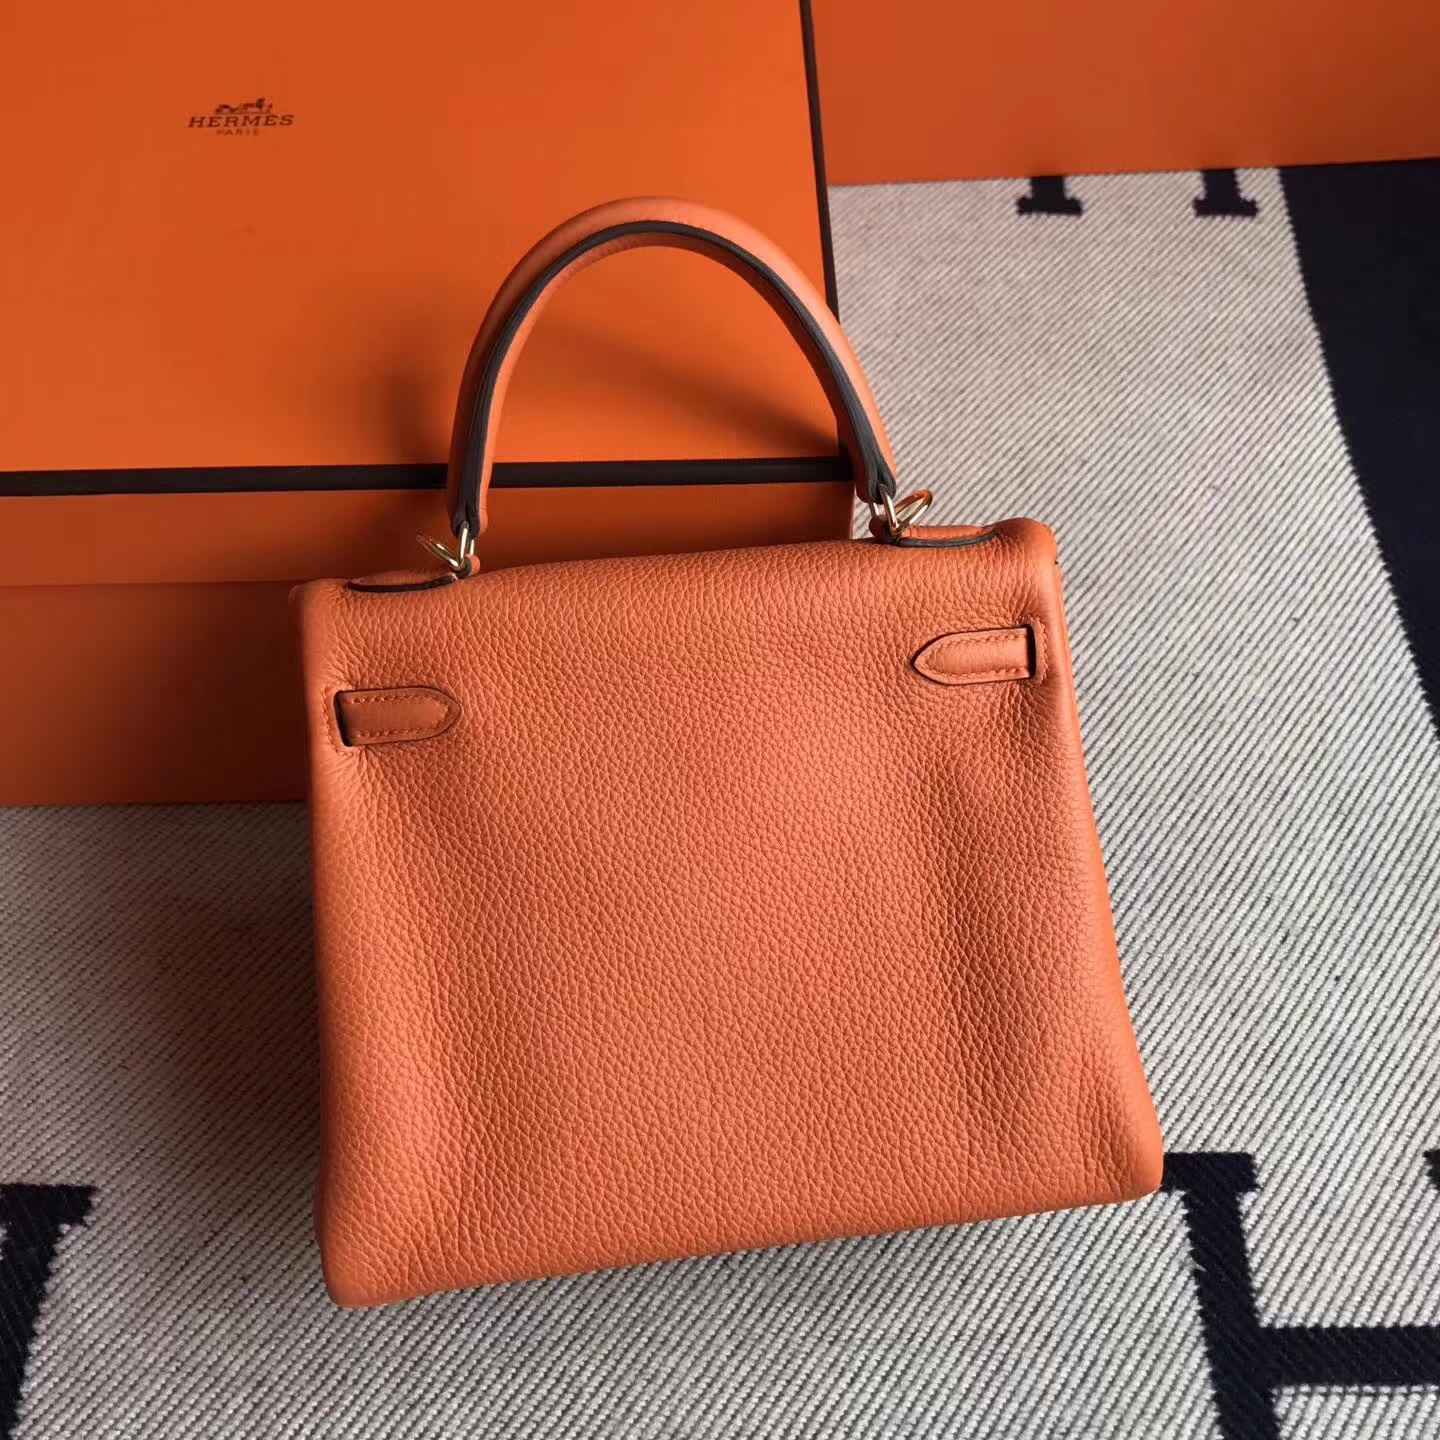 New Lovely Hermes Kelly Bag25cm in 93 Orange Togo Leather Gold Hardware ...